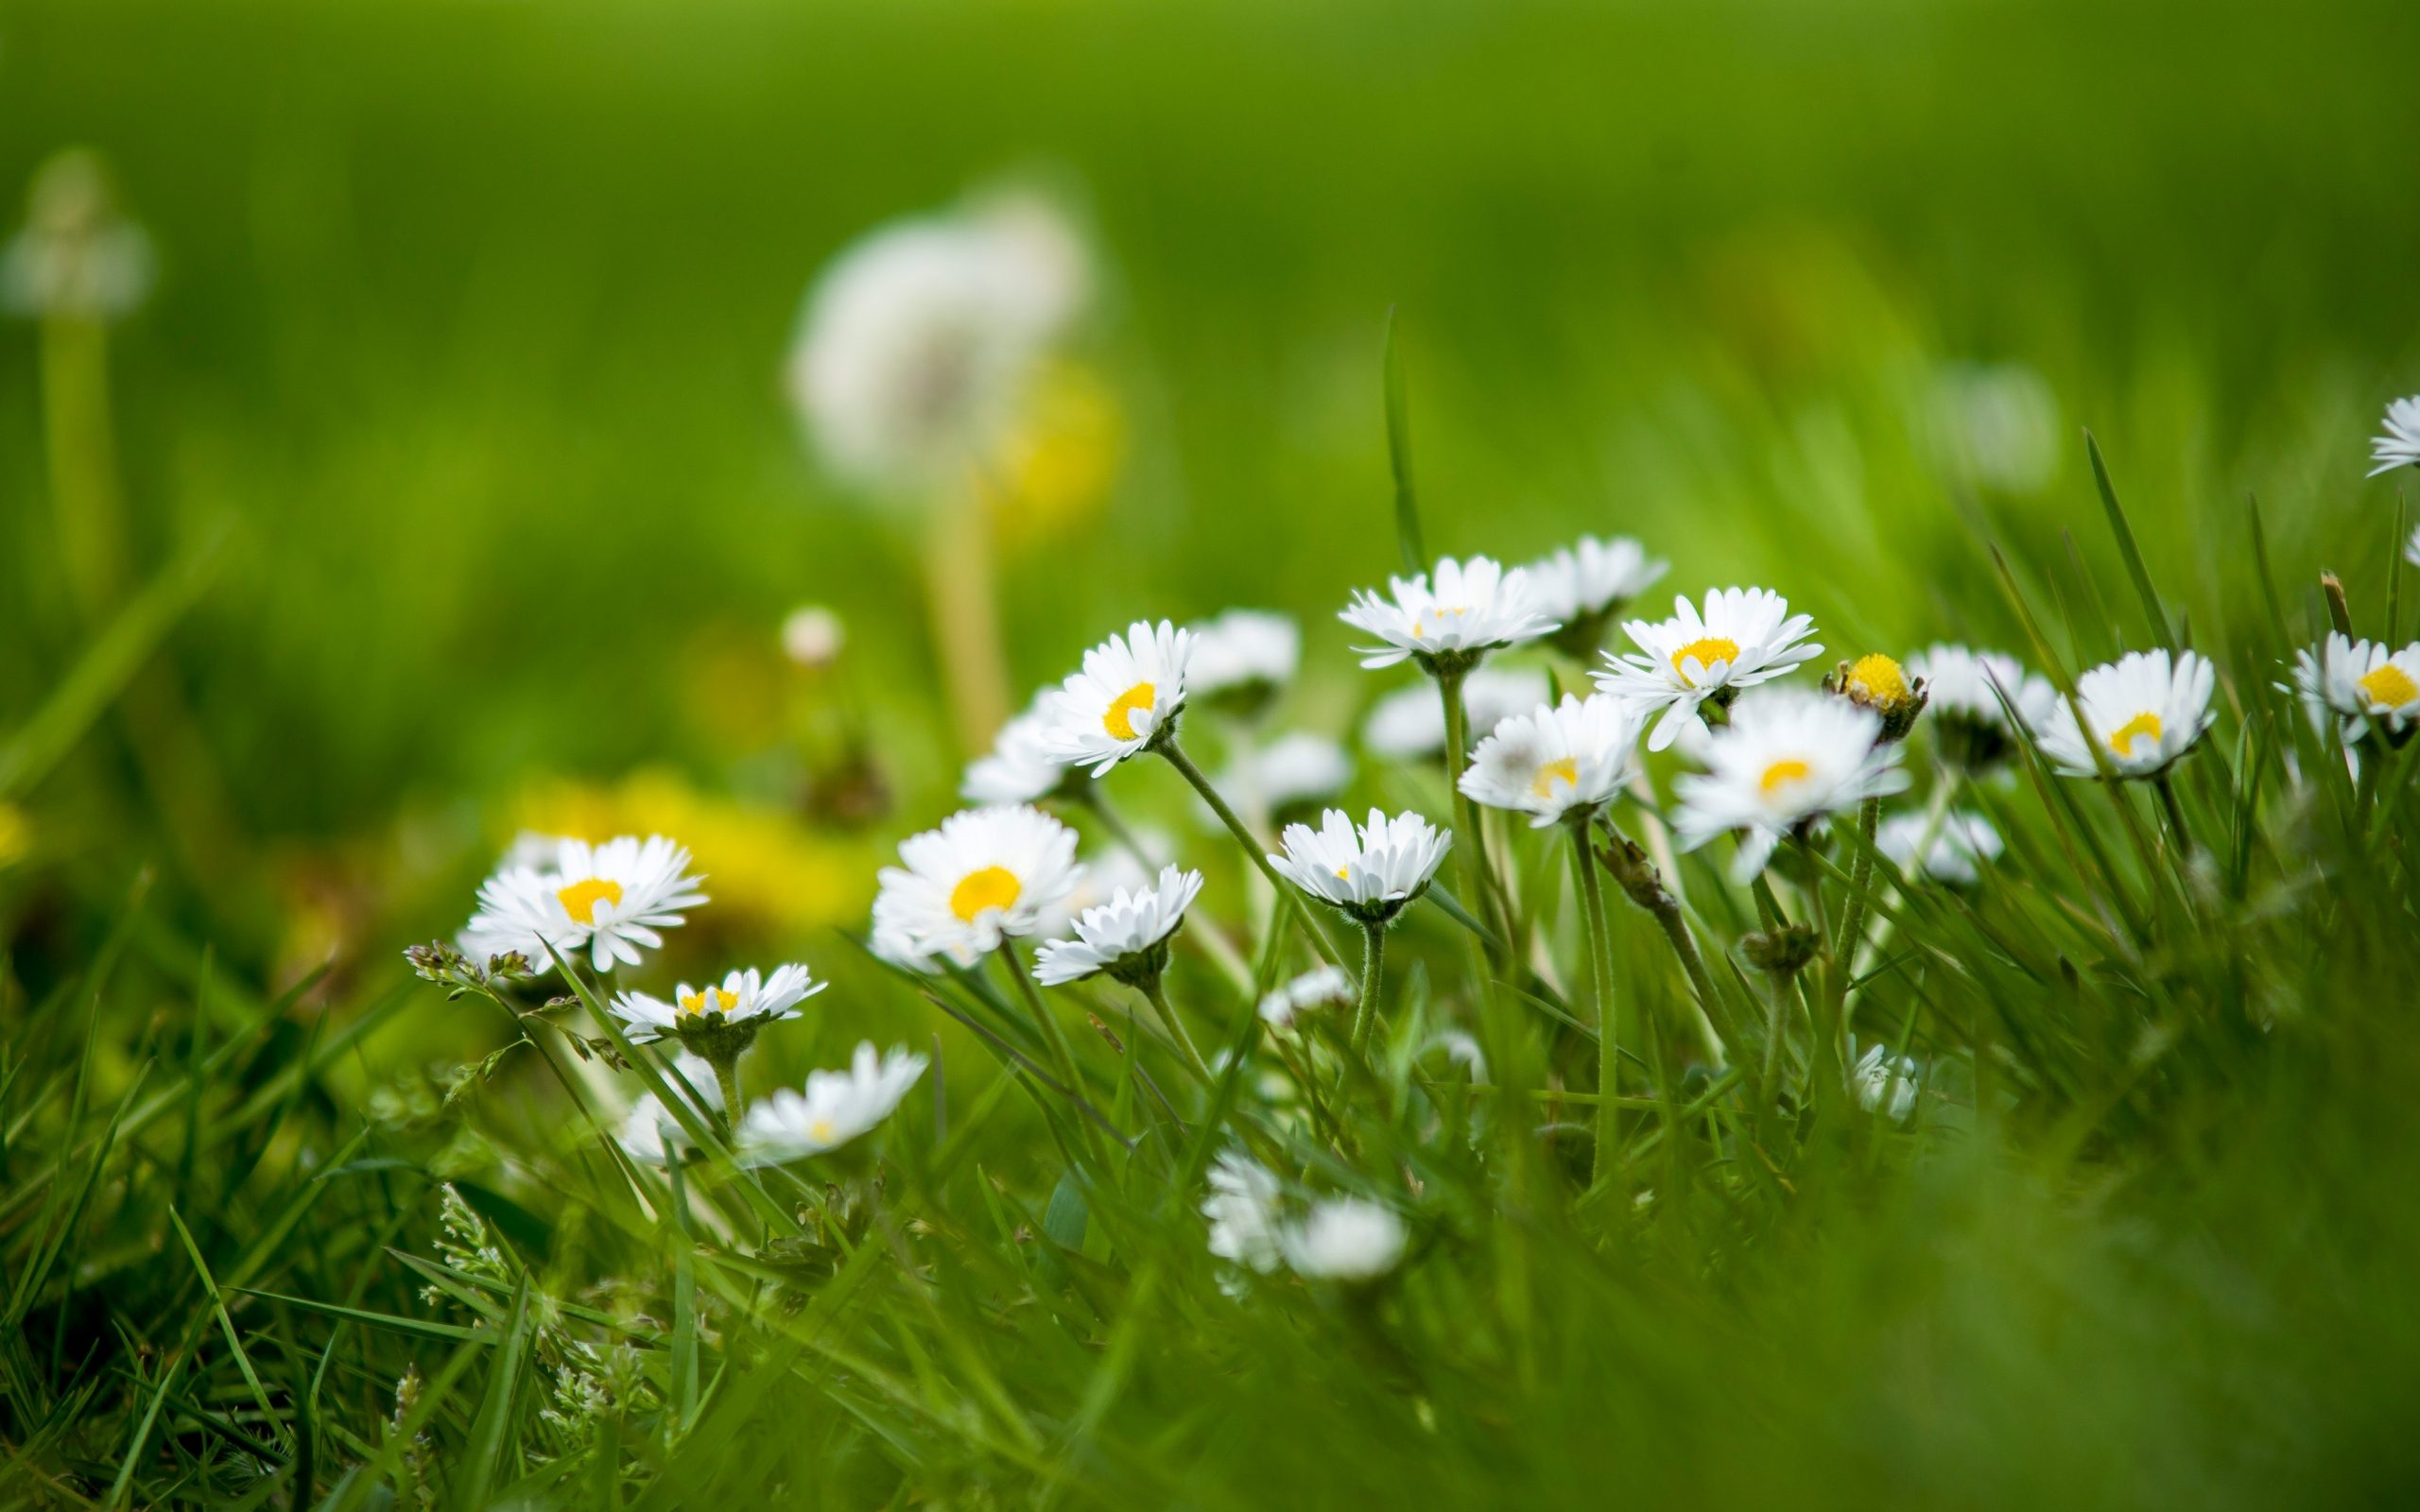 Meadow, small white daisy, green grass, 2560x1600 wallpaper